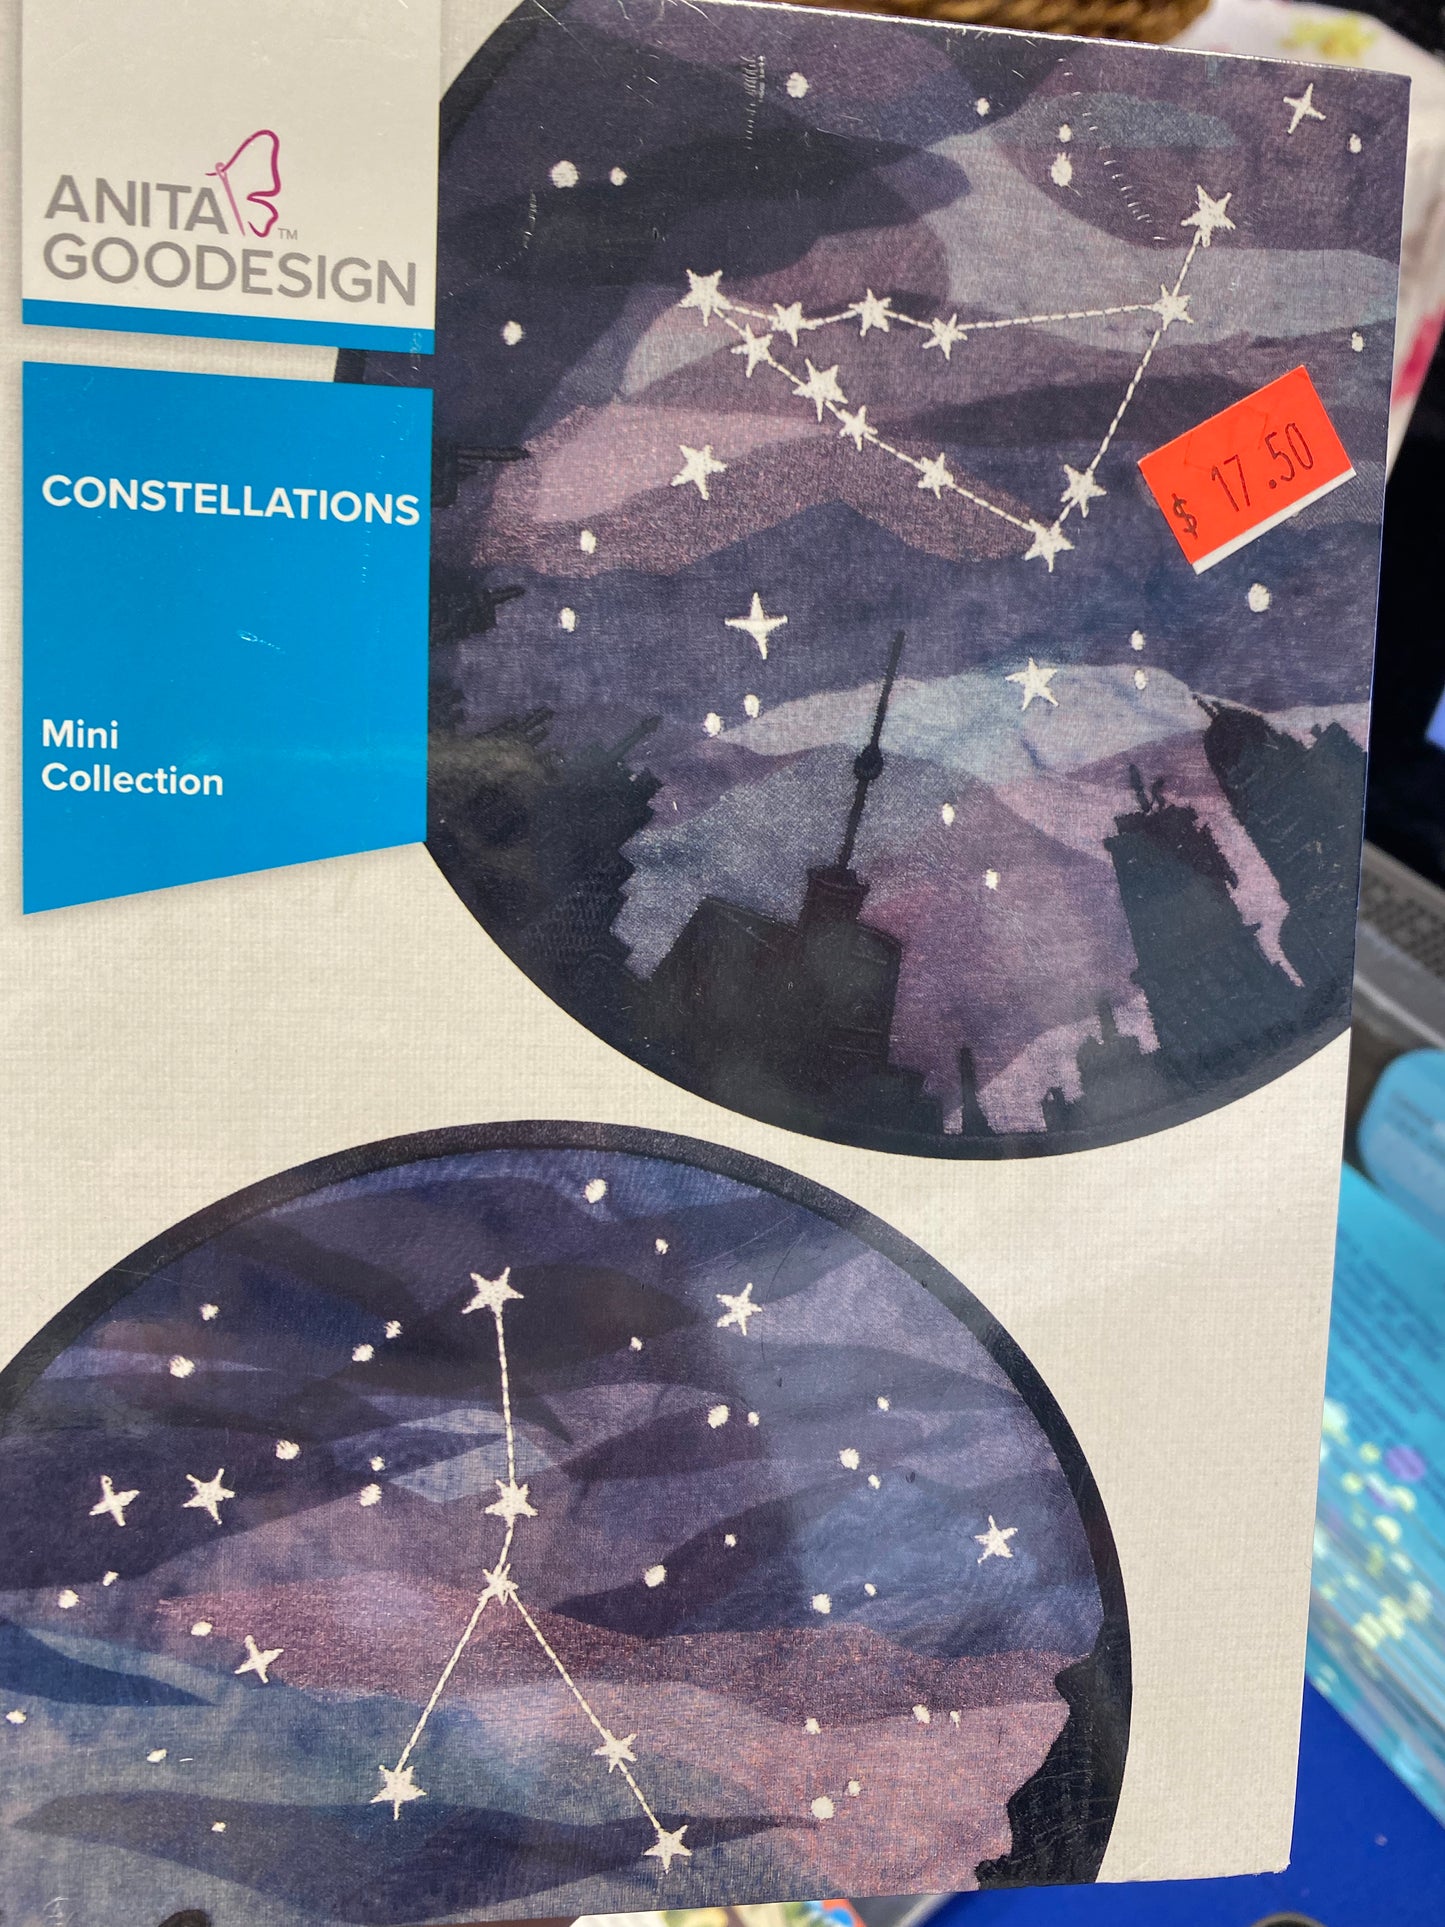 Constellations by Anita Goodesign